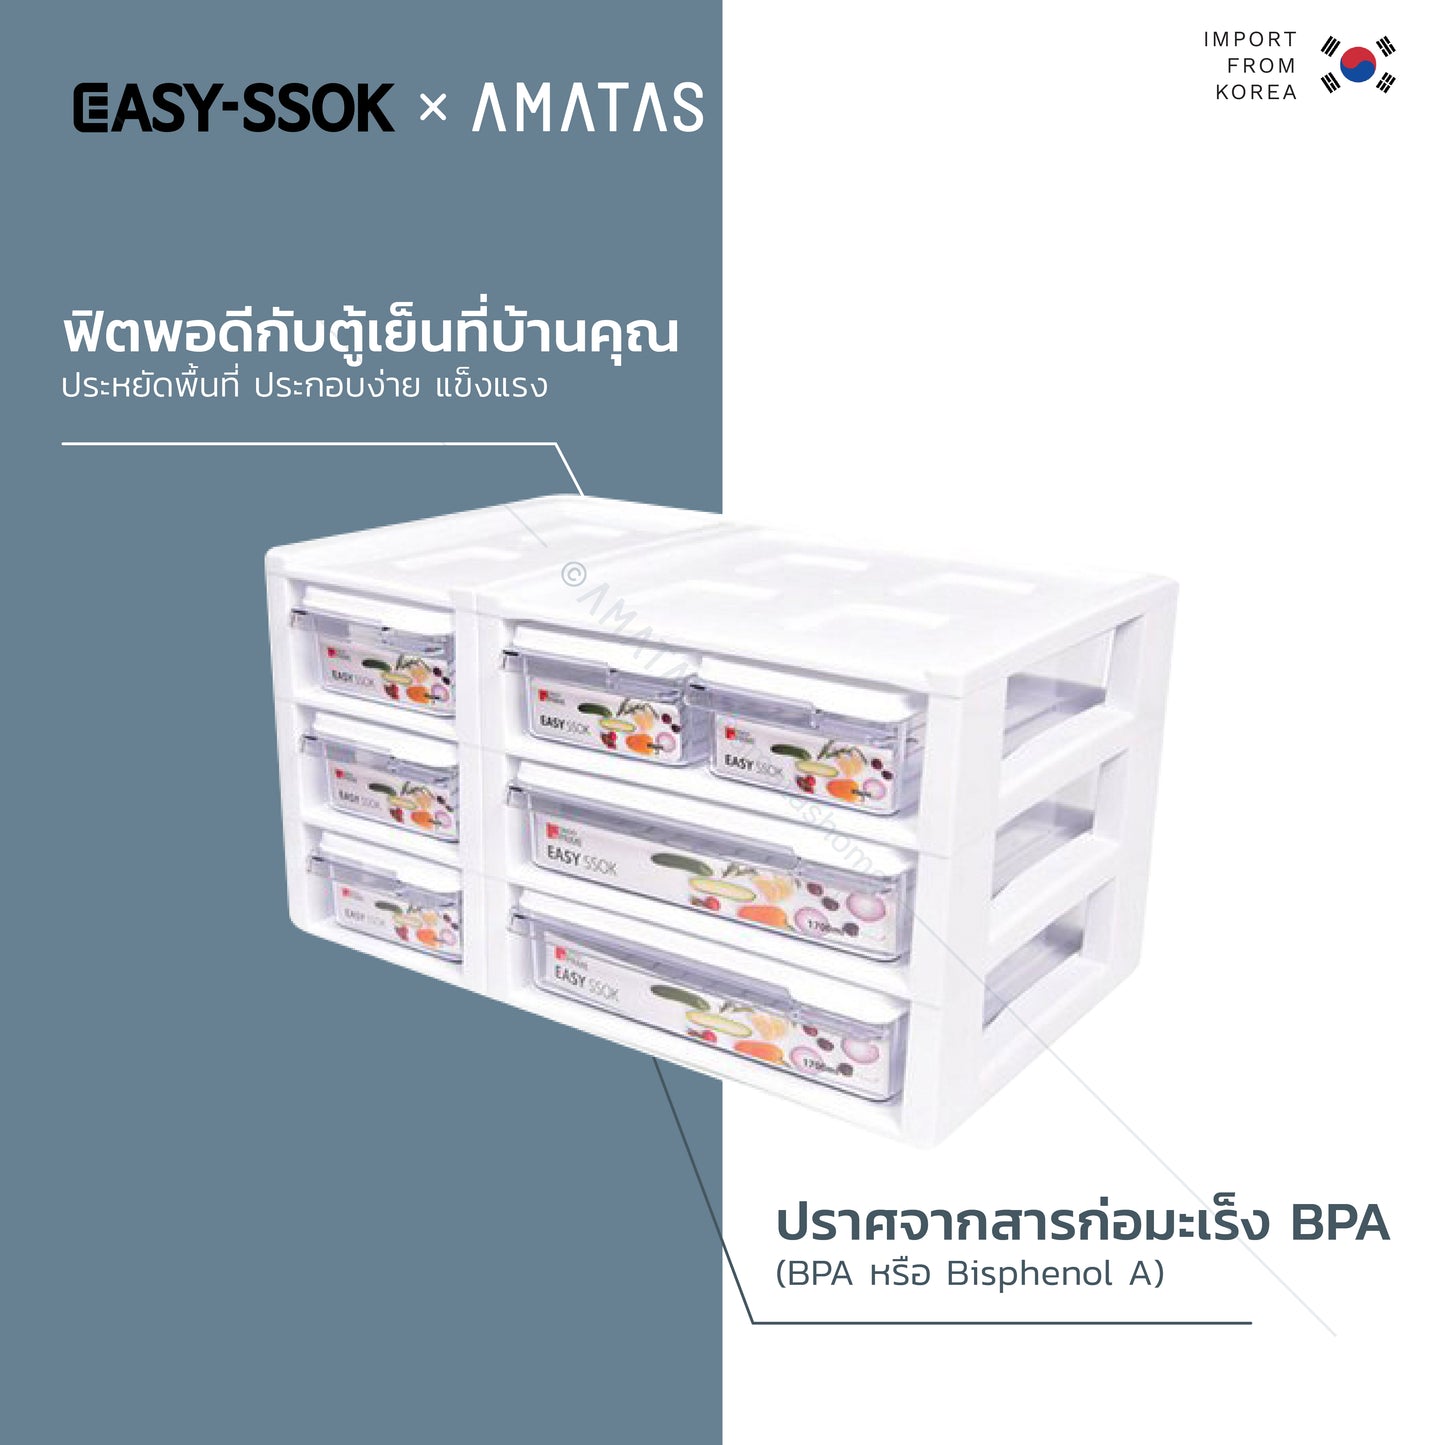 EASY-SSOK ชุดชั้นจัดระเบียบในตู้เย็น กล่องจัดระเบียบ กล่องเก็บอาหาร อุปกรณ์จัดเก็บอาหาร